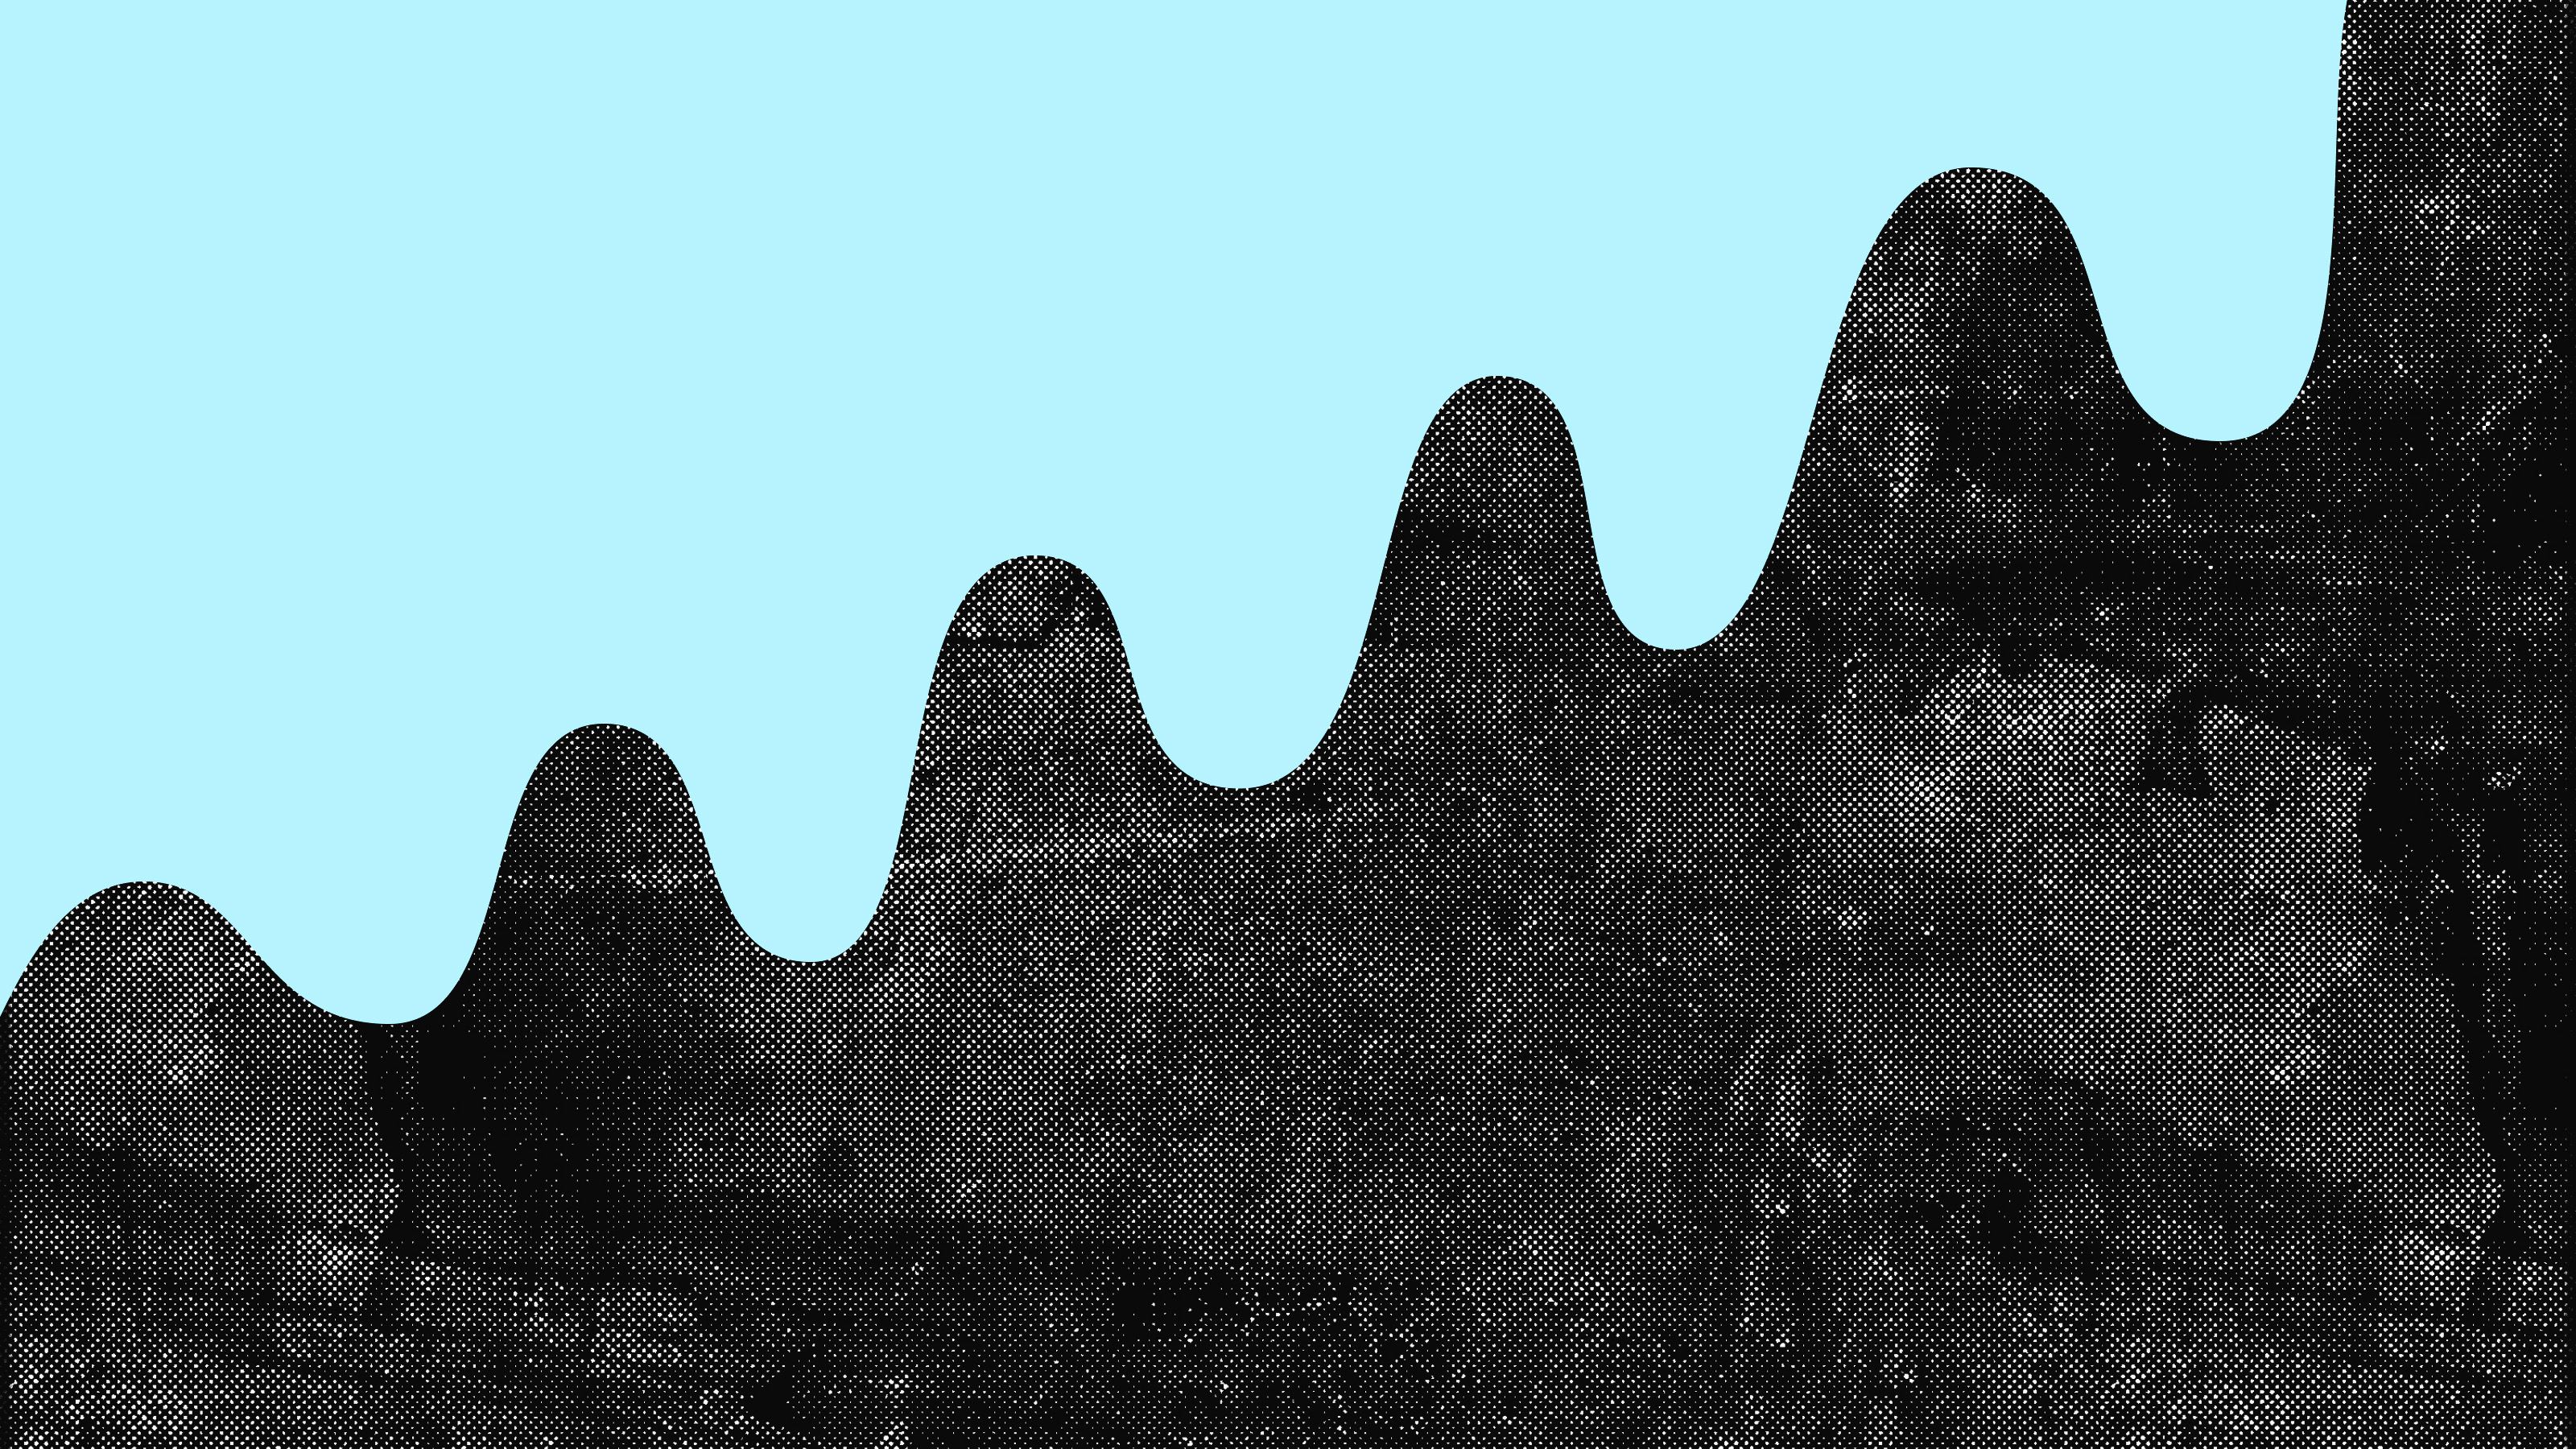 A monochrome representation of a wave amidst a blue backdrop.